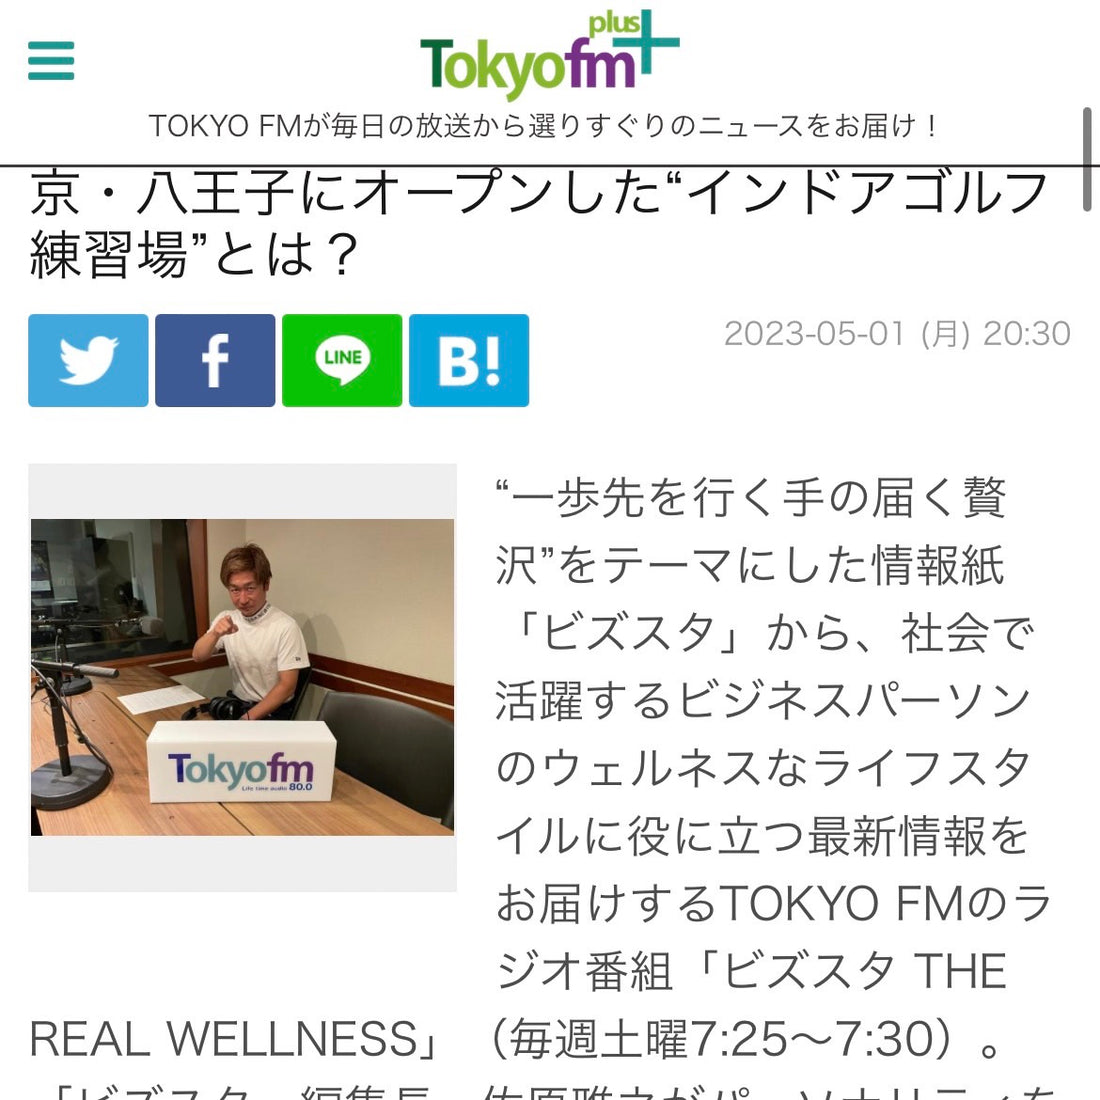 TOKYO FM＋、Yahho!ニュース、マイナビニュースに掲載されました！